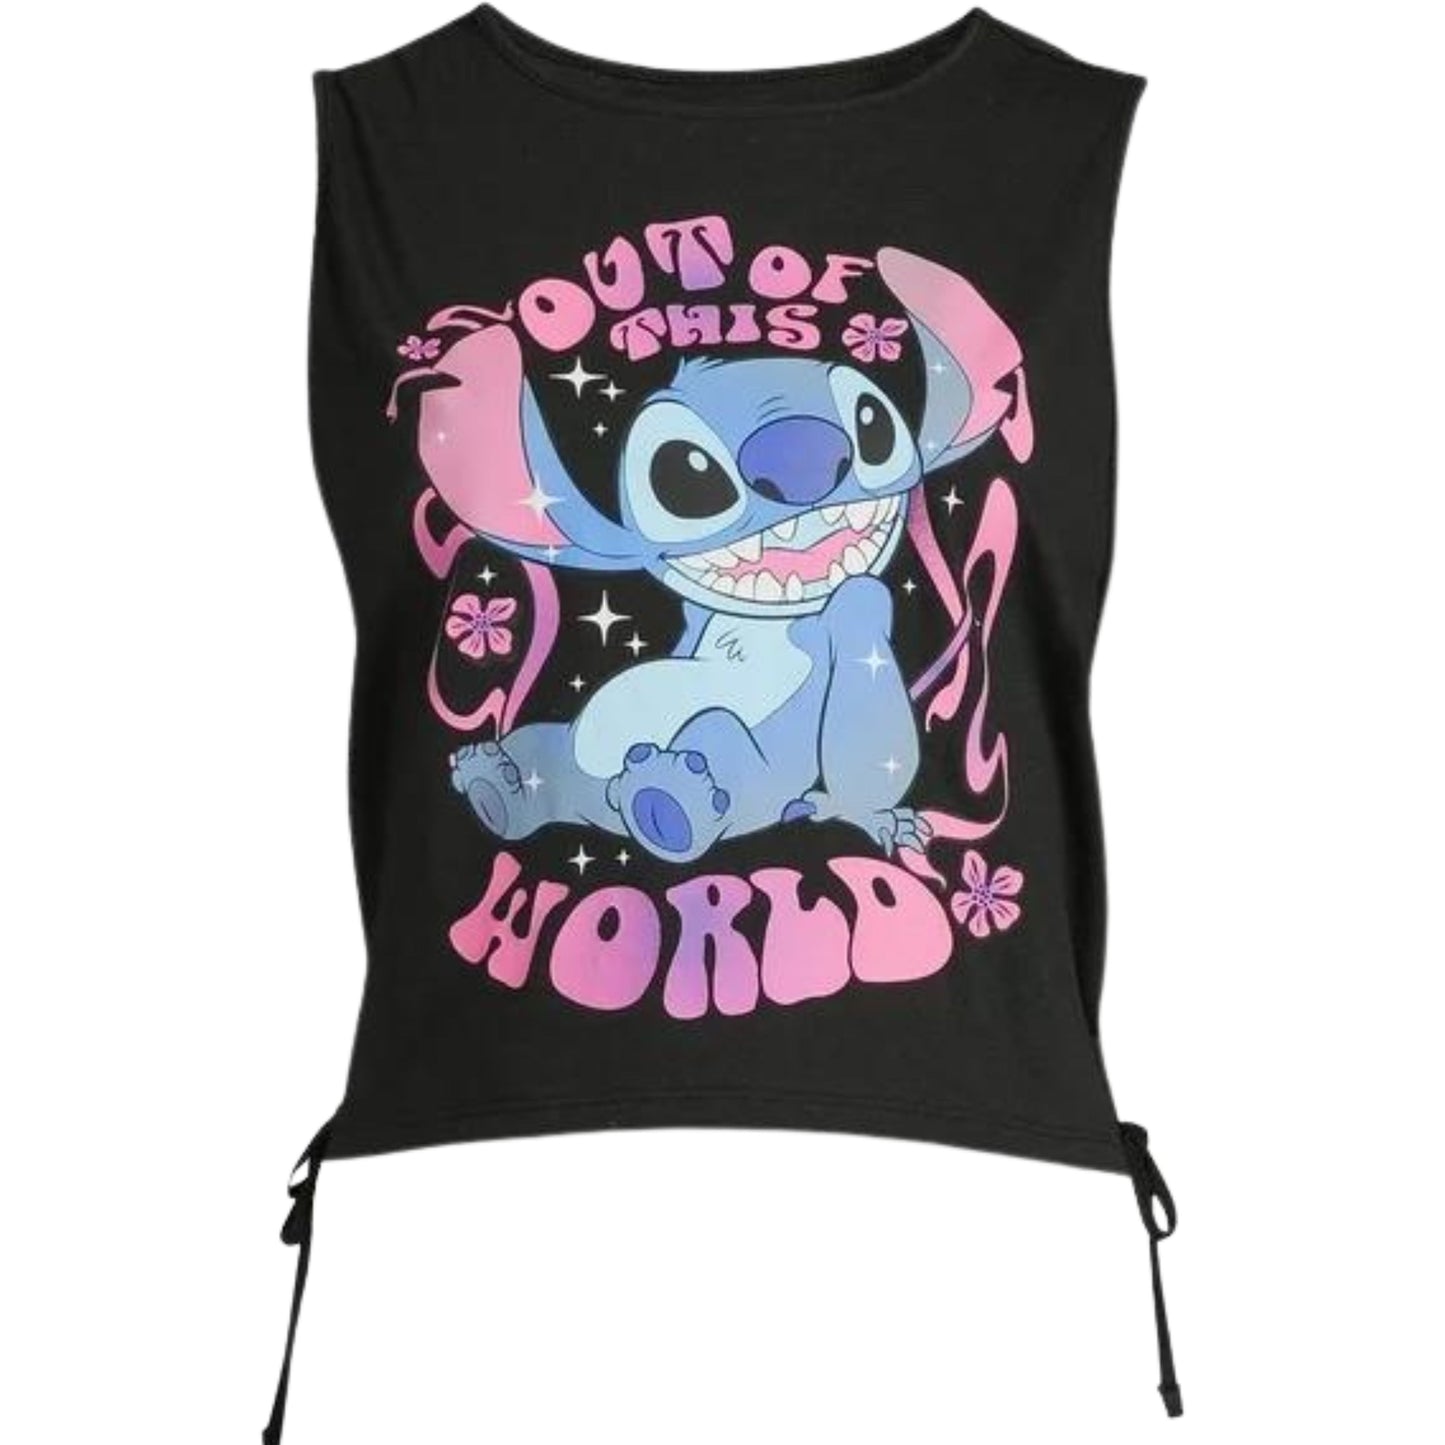 Disney Junior Girls Lilo and Stitch Crop Top Tank T-Shirt with Side Tie- Junior Girls Sizes XS-3XL